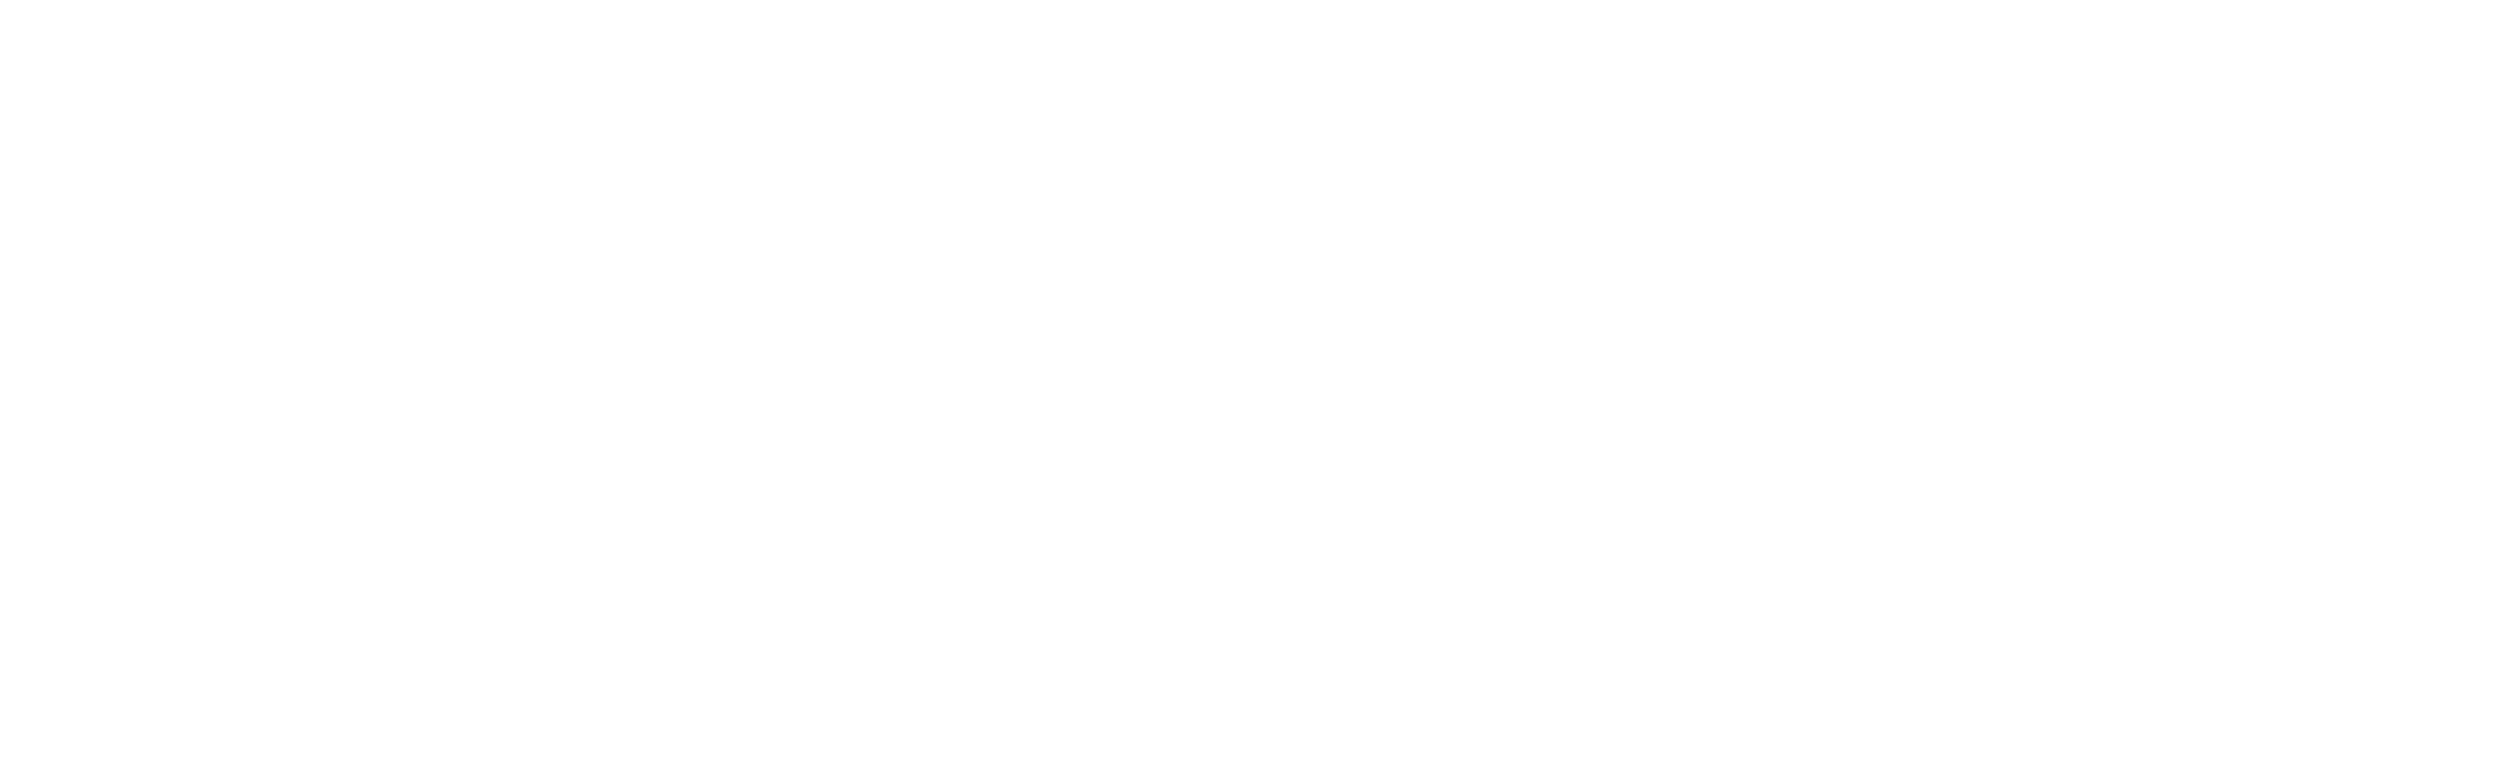 CaptureChris Media - Photo/Video Production Company